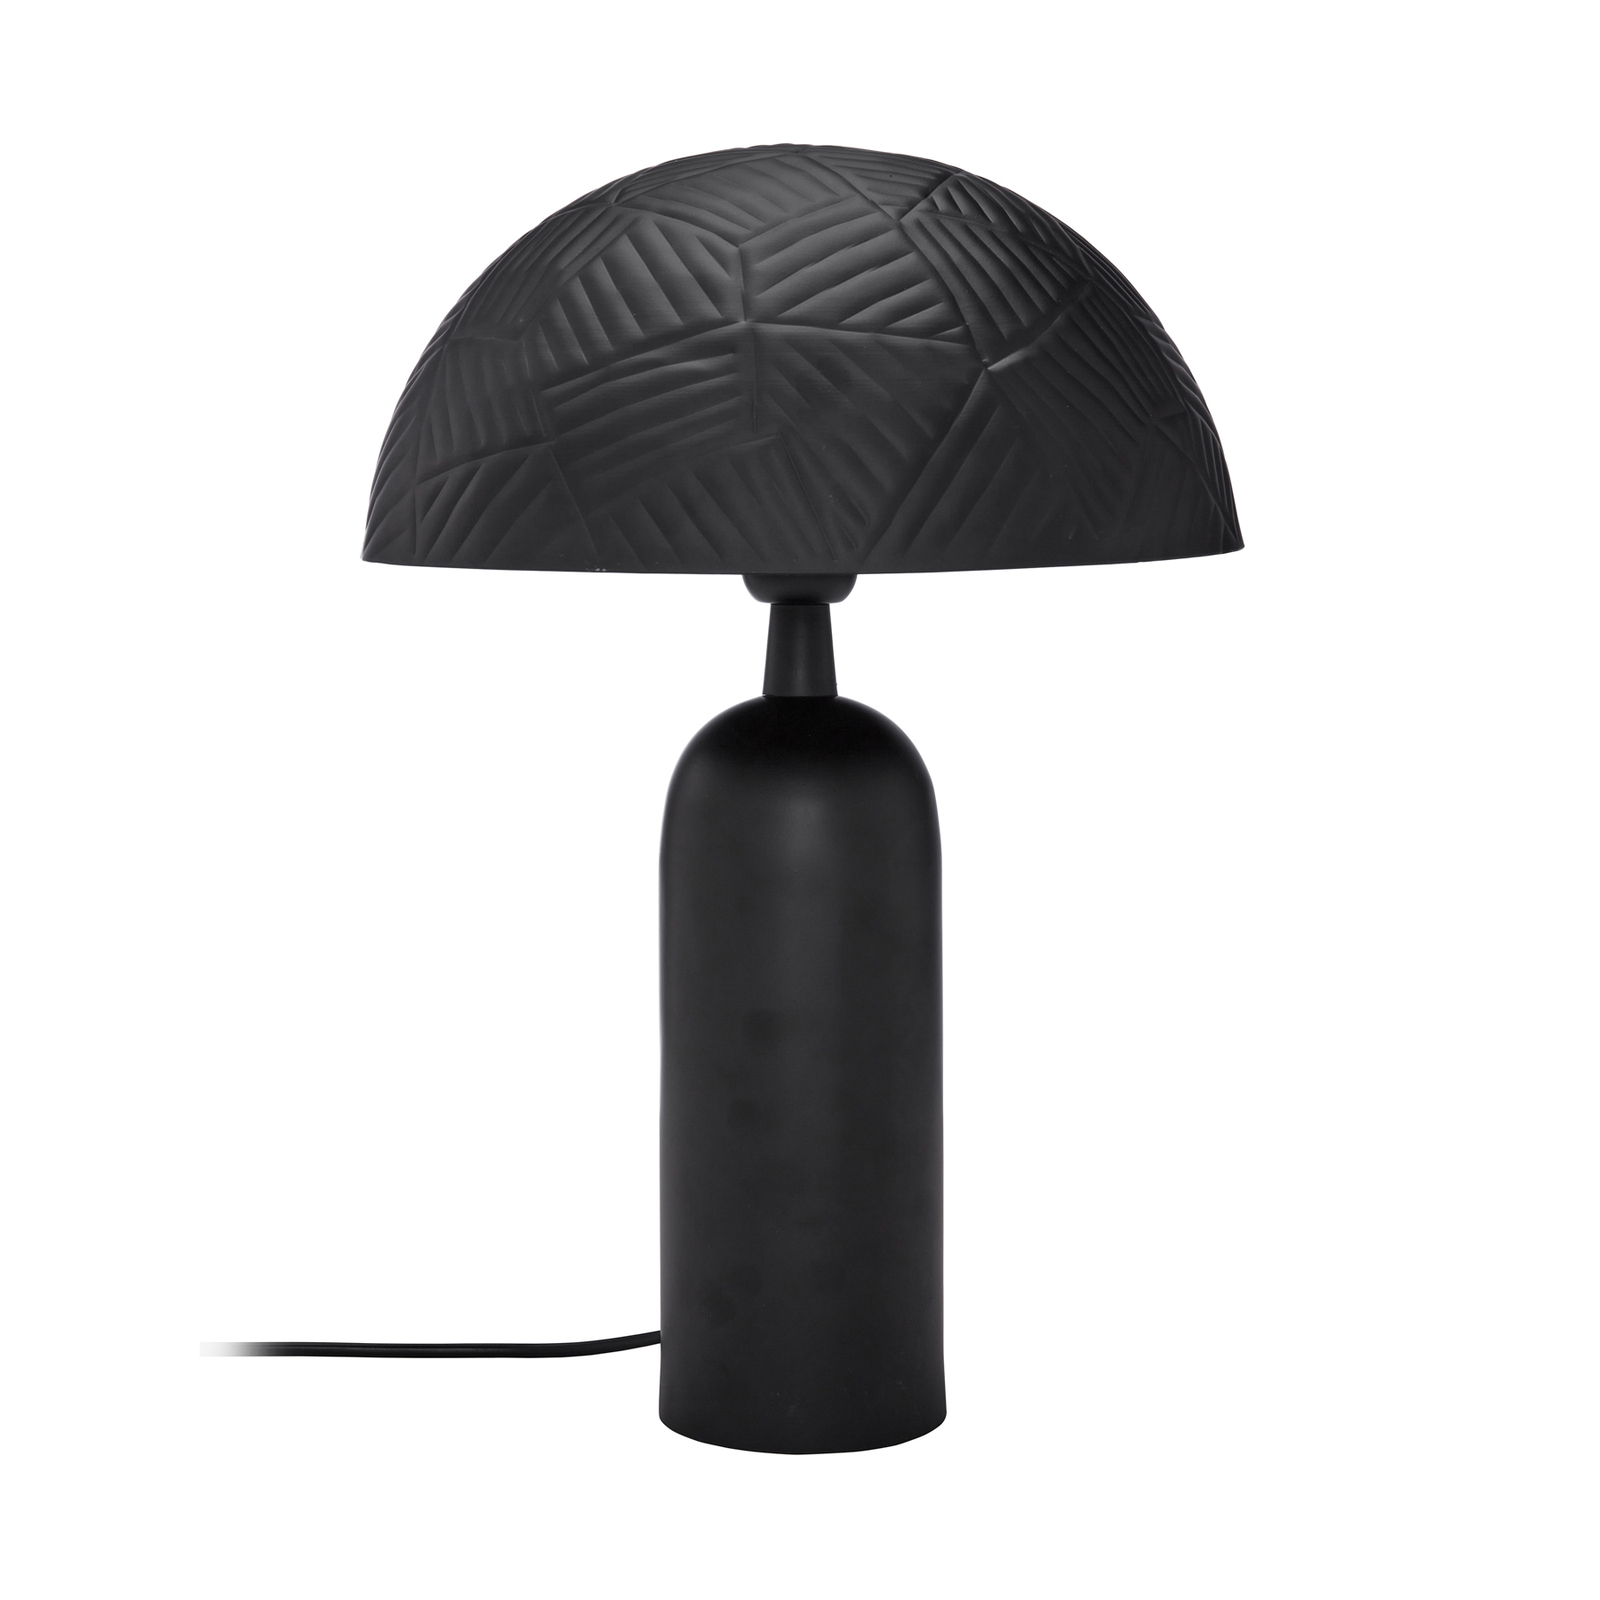 PR Home Carter table lamp made of metal, black